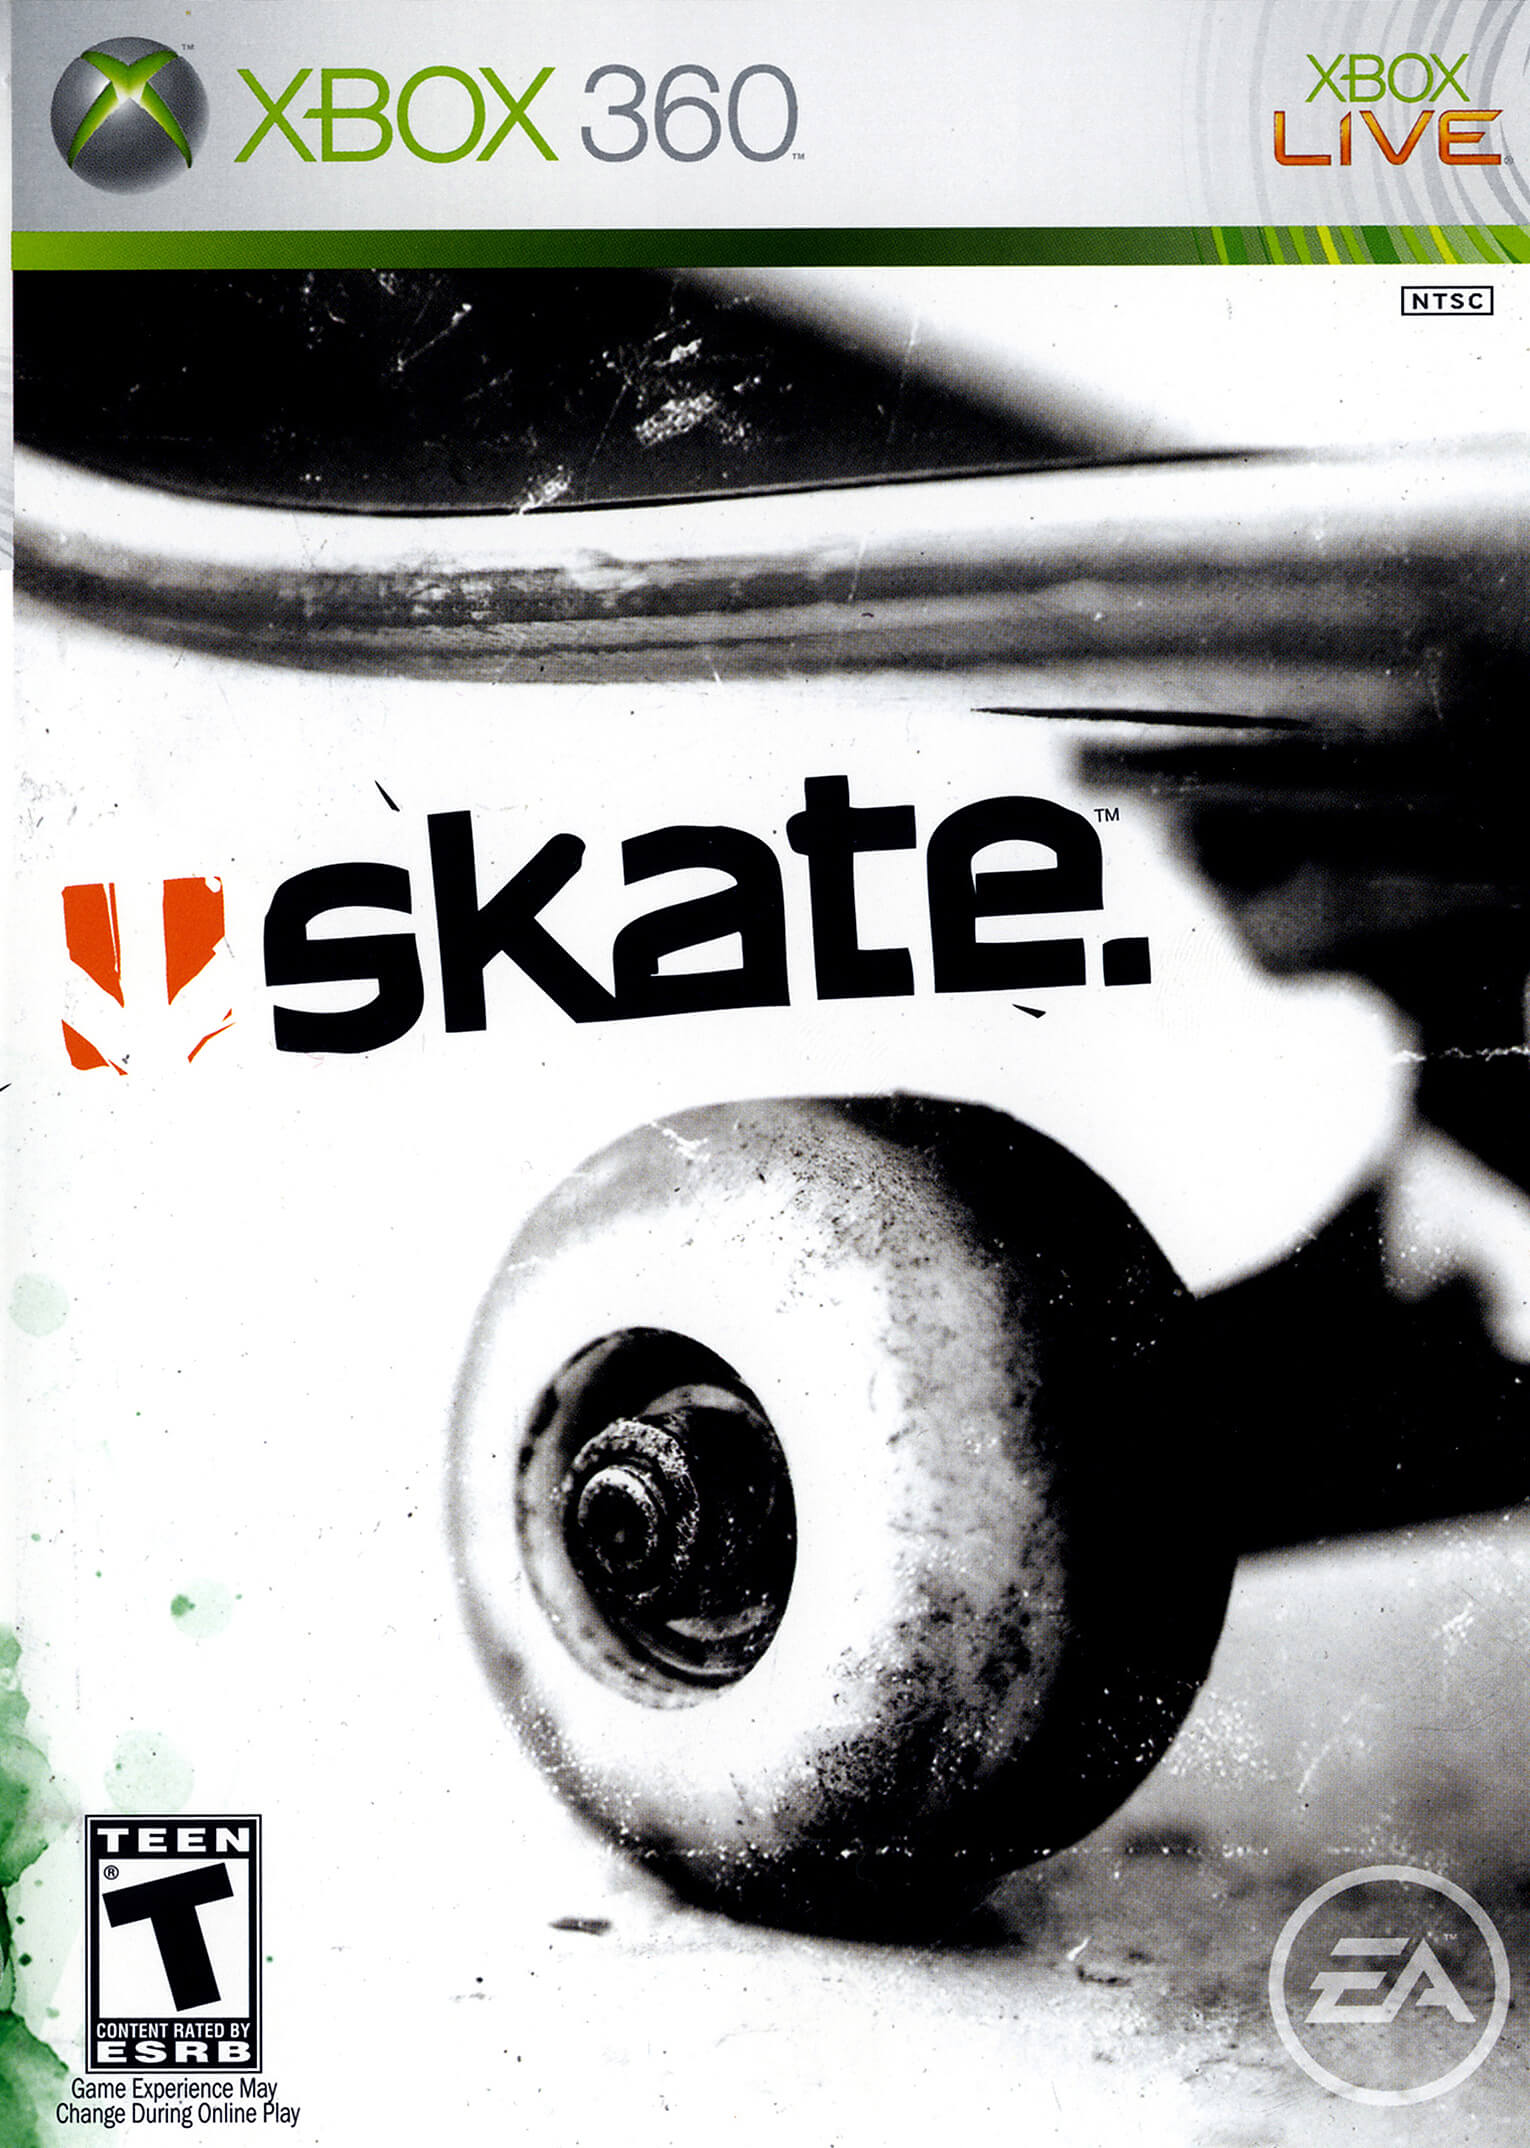 Skate ROM & ISO - XBOX 360 Game